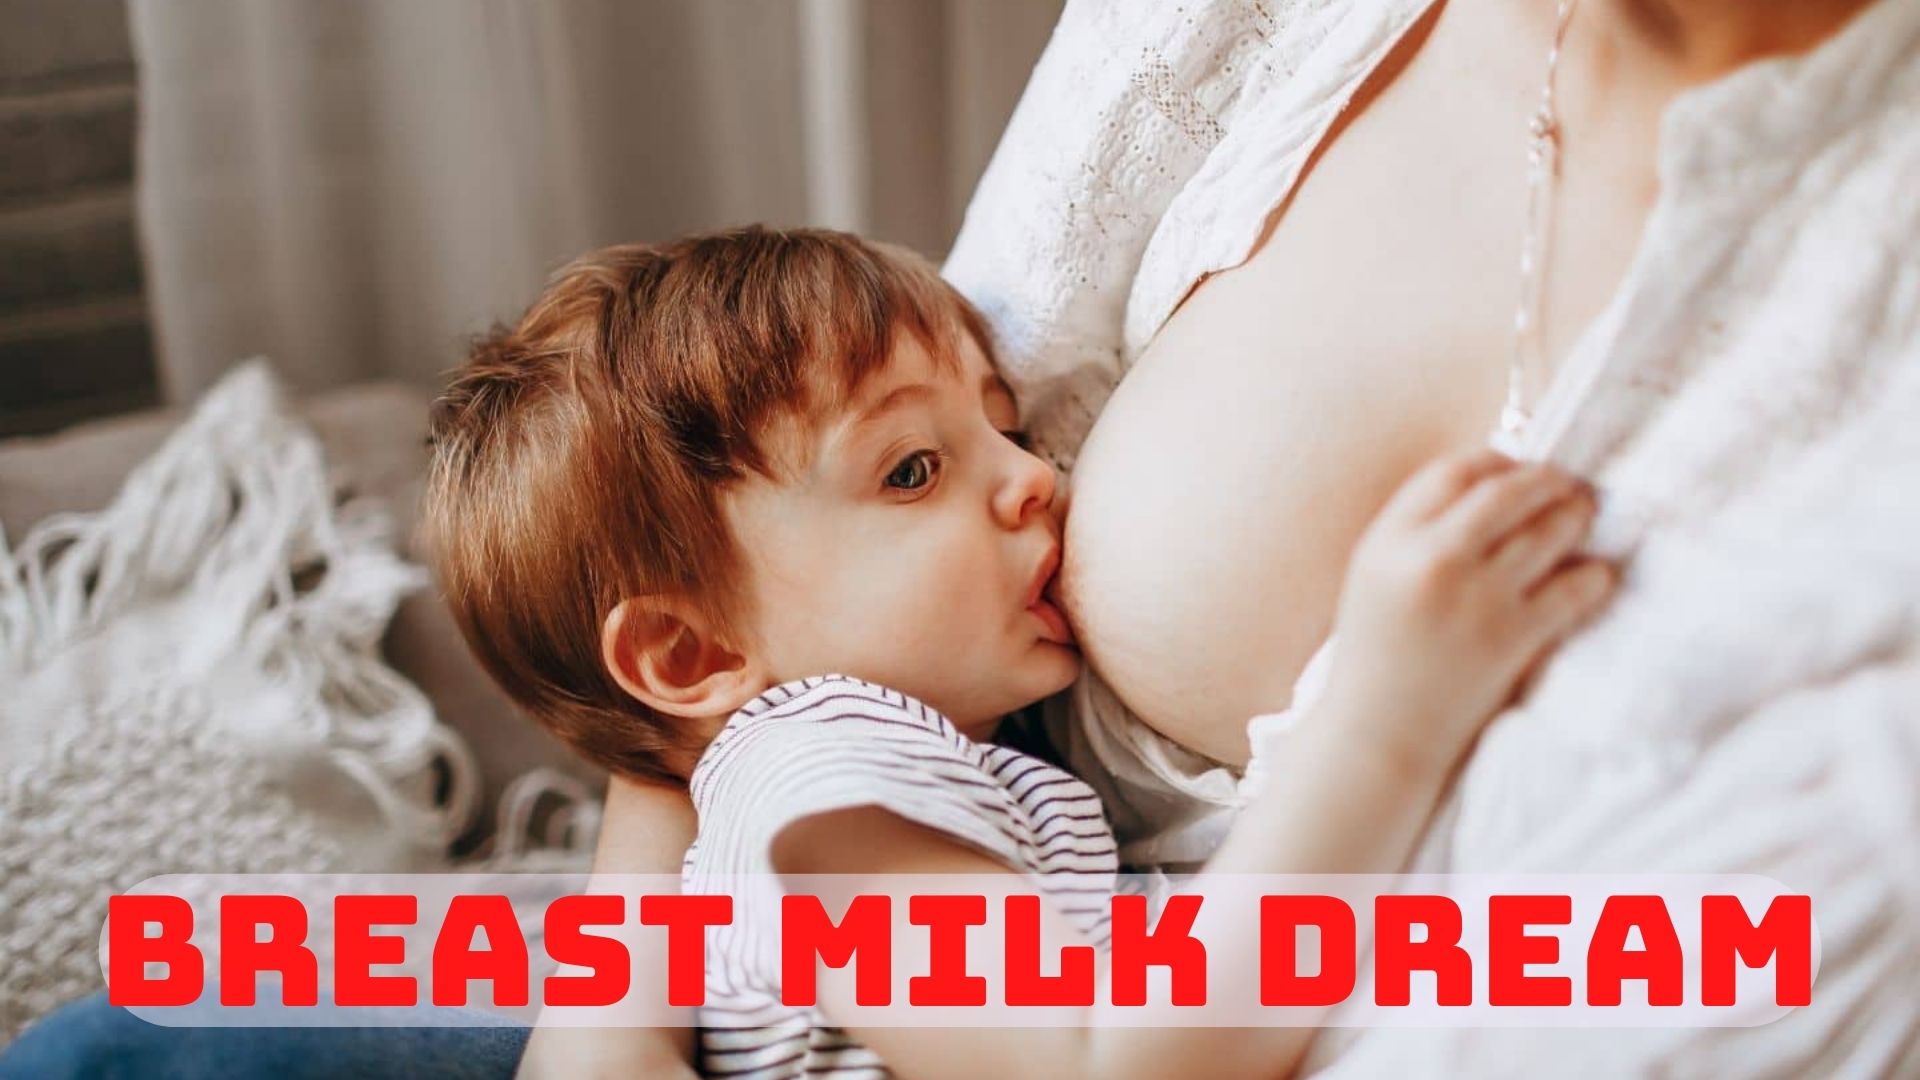 Breast Milk Dream - Indicative Of Your Childhood Memories